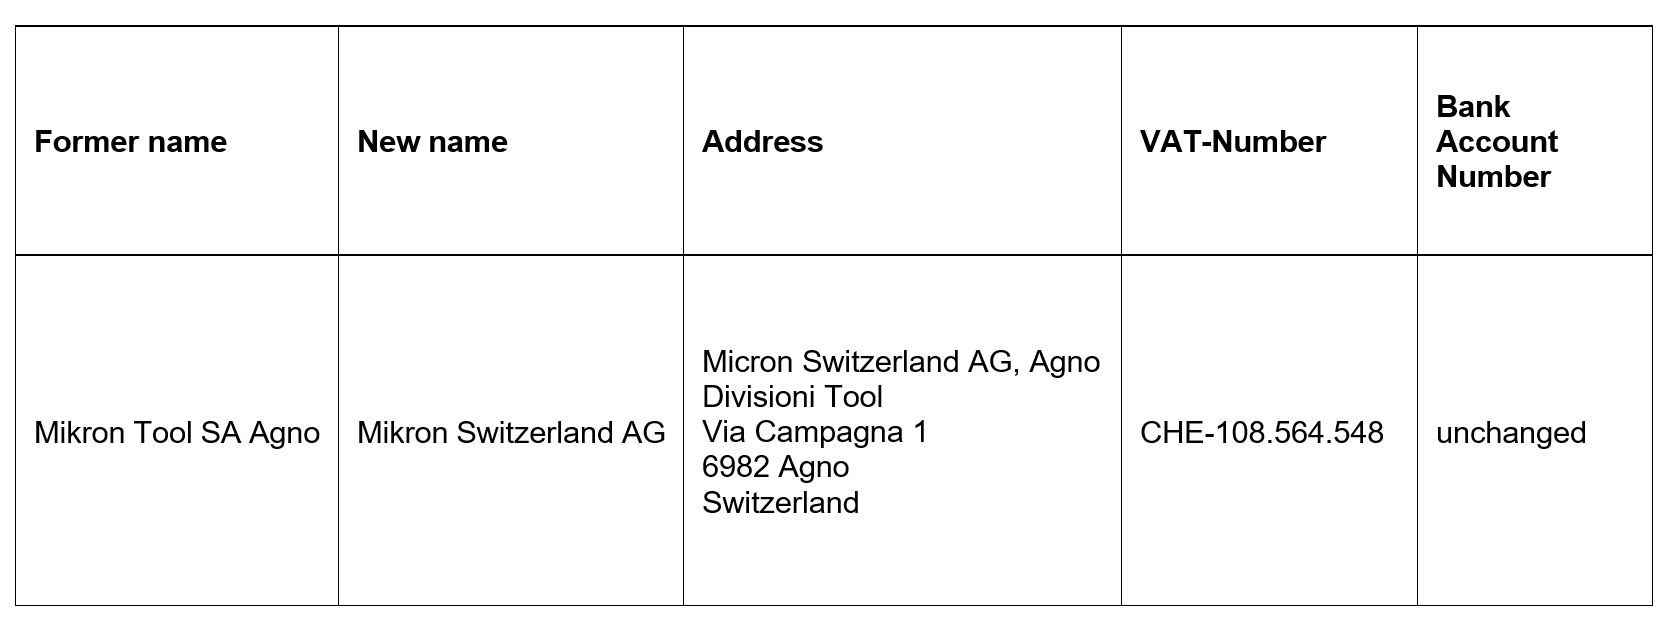 Merger into Mikron Switzerland AG